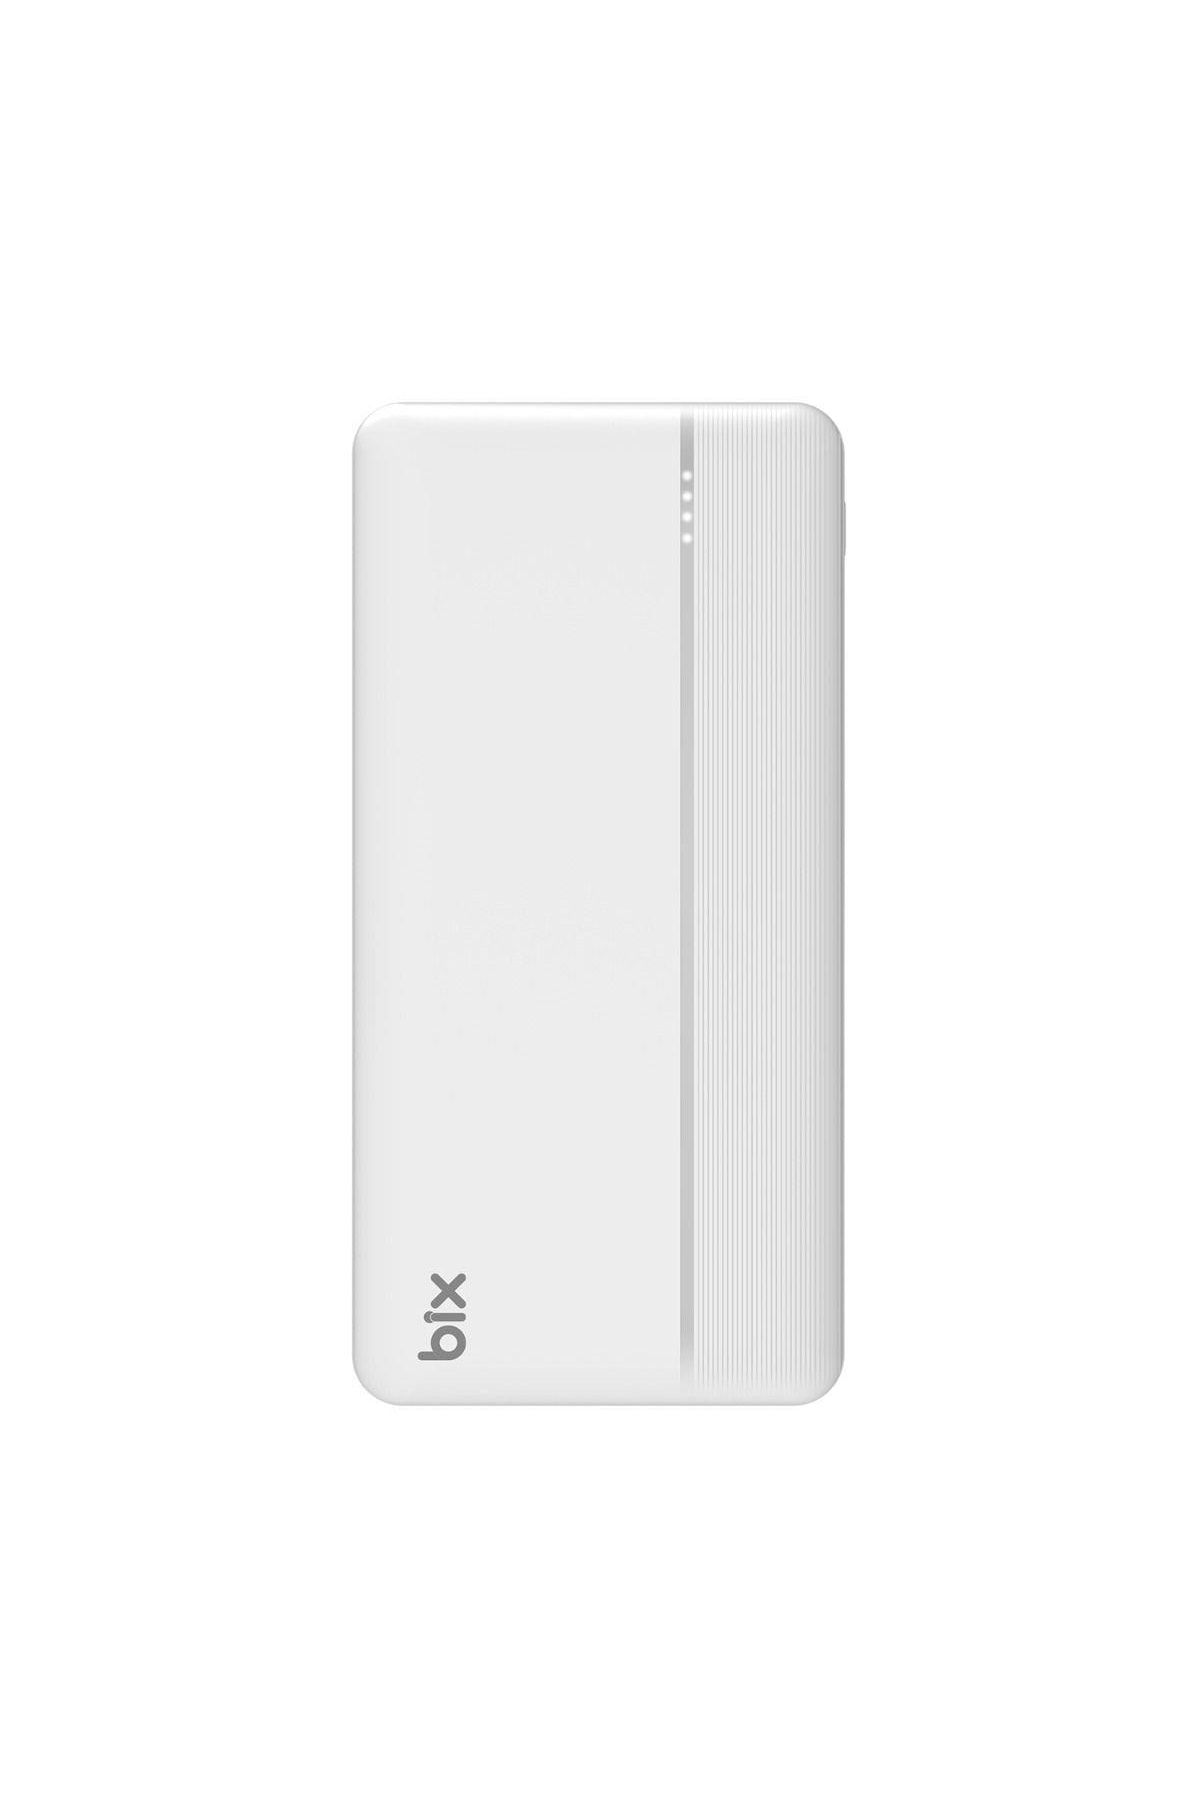 Bix Pb302 Dört Çıkışlı Qc 4.0 Pd 30000 Mah Powerbank Beyaz